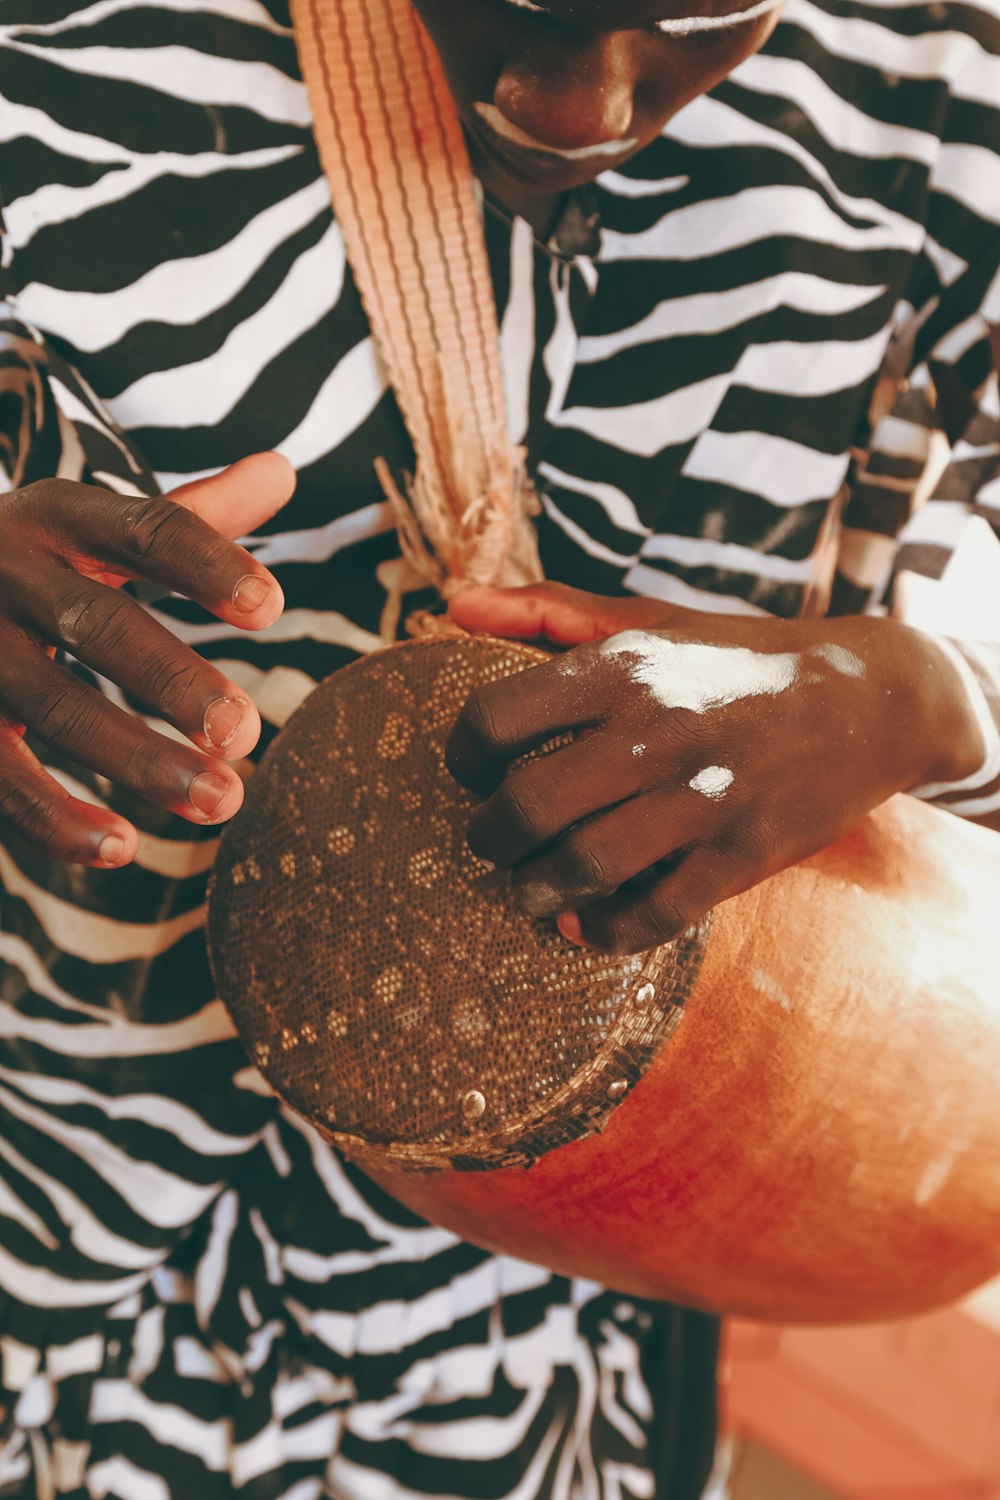 a woman in a zebra print shirt holding a drum